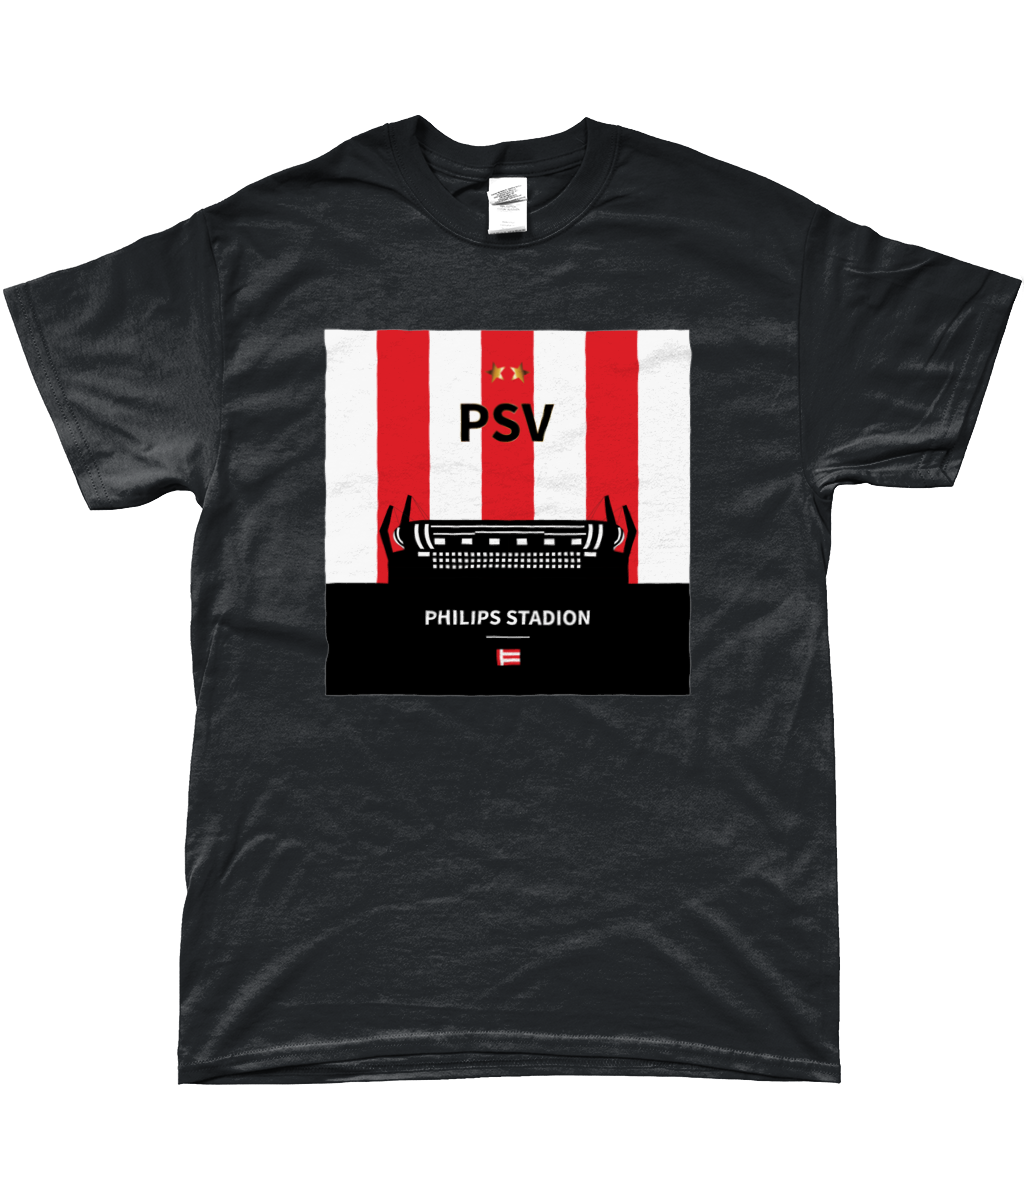 PSV - Philips Stadion T-shirt